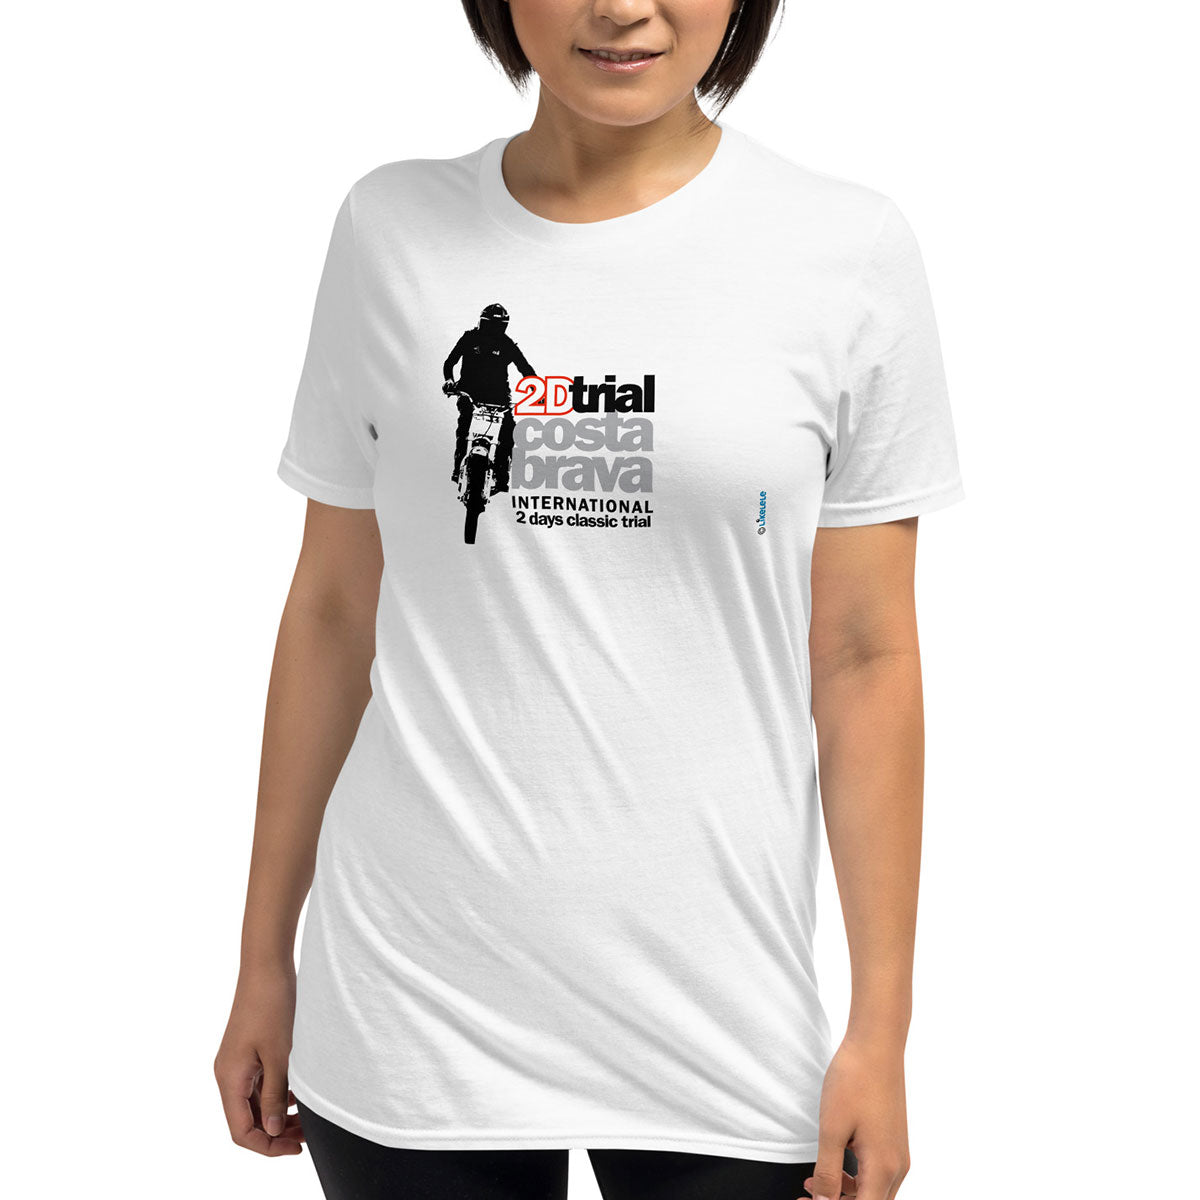 2D TRIAL COSTA BRAVA · Camiseta m/corta·Mujer/Unisex · Basic·Blanco-129a2